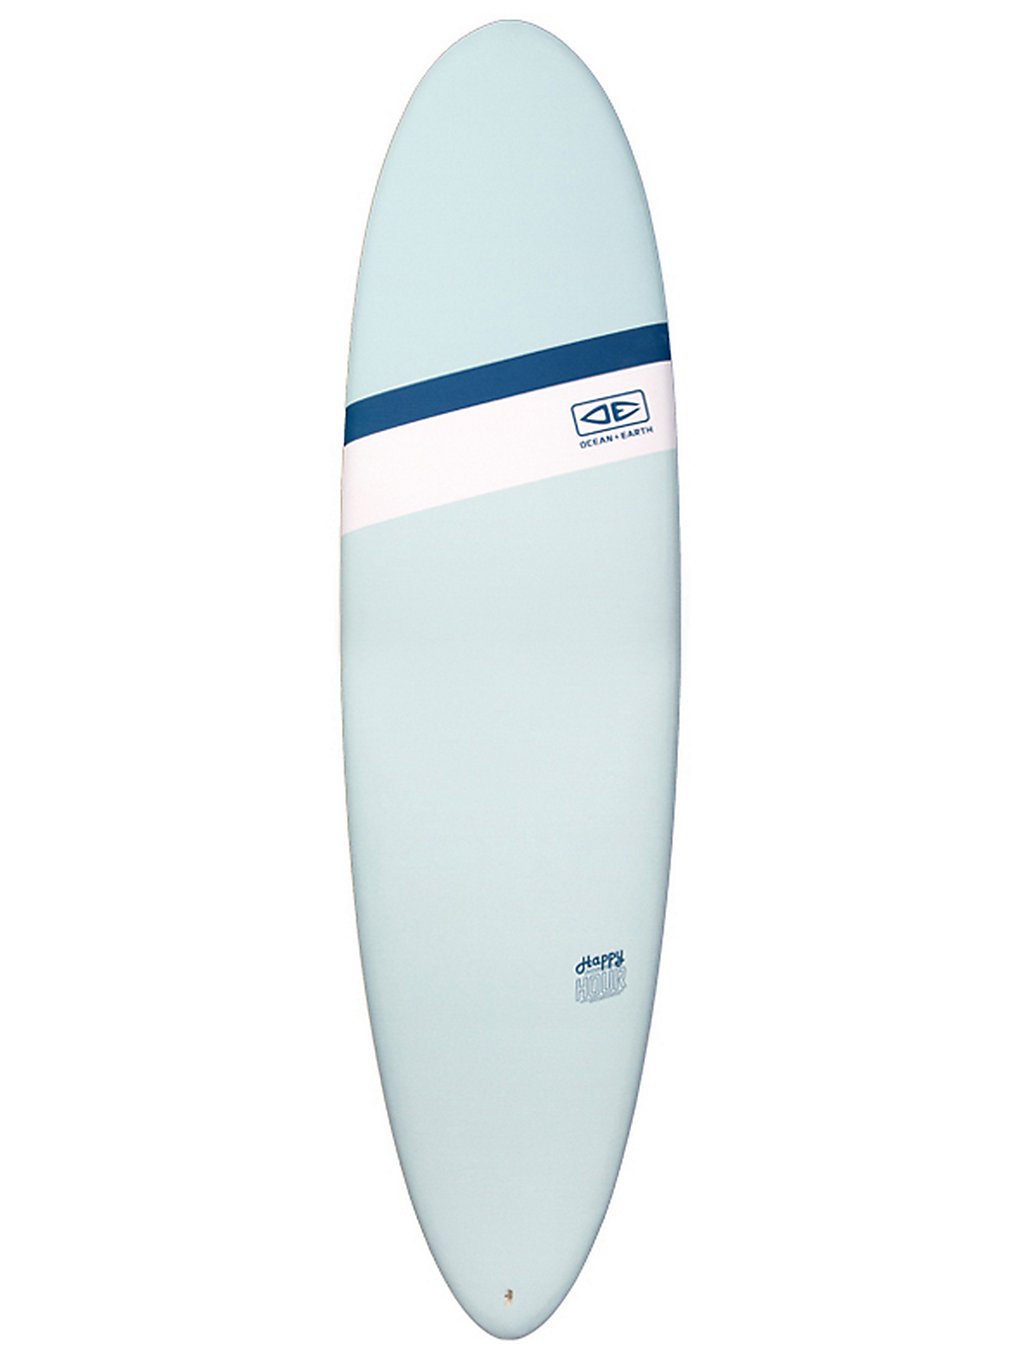 Ocean & Earth Happy Hour Epoxy Soft 52L 7'0 Surfboard seamist